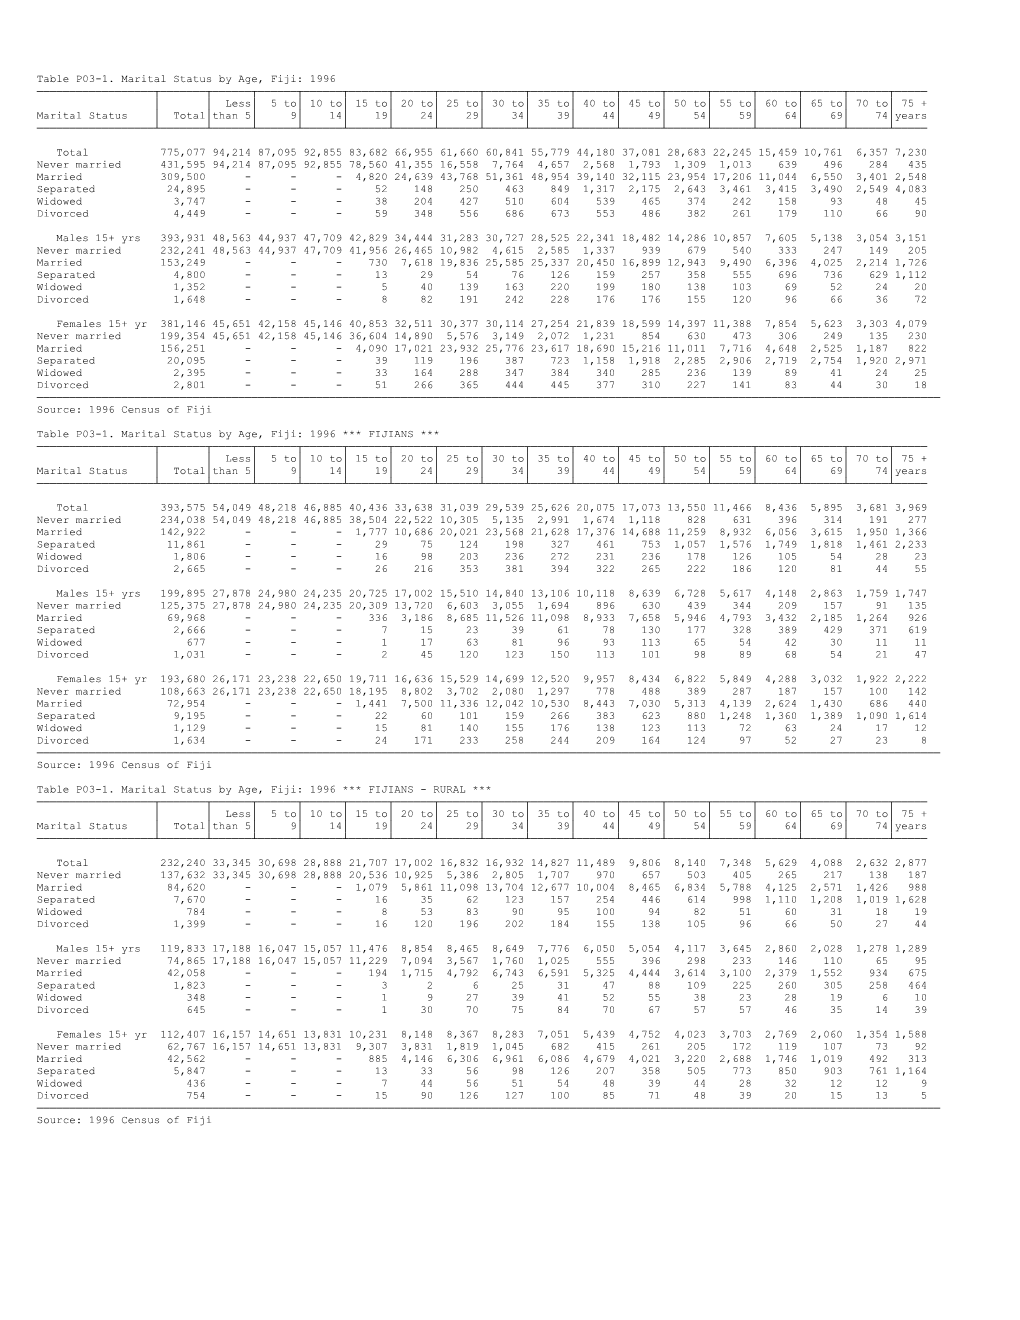 Table P03-1. Marital Status by Age, Fiji: 1996